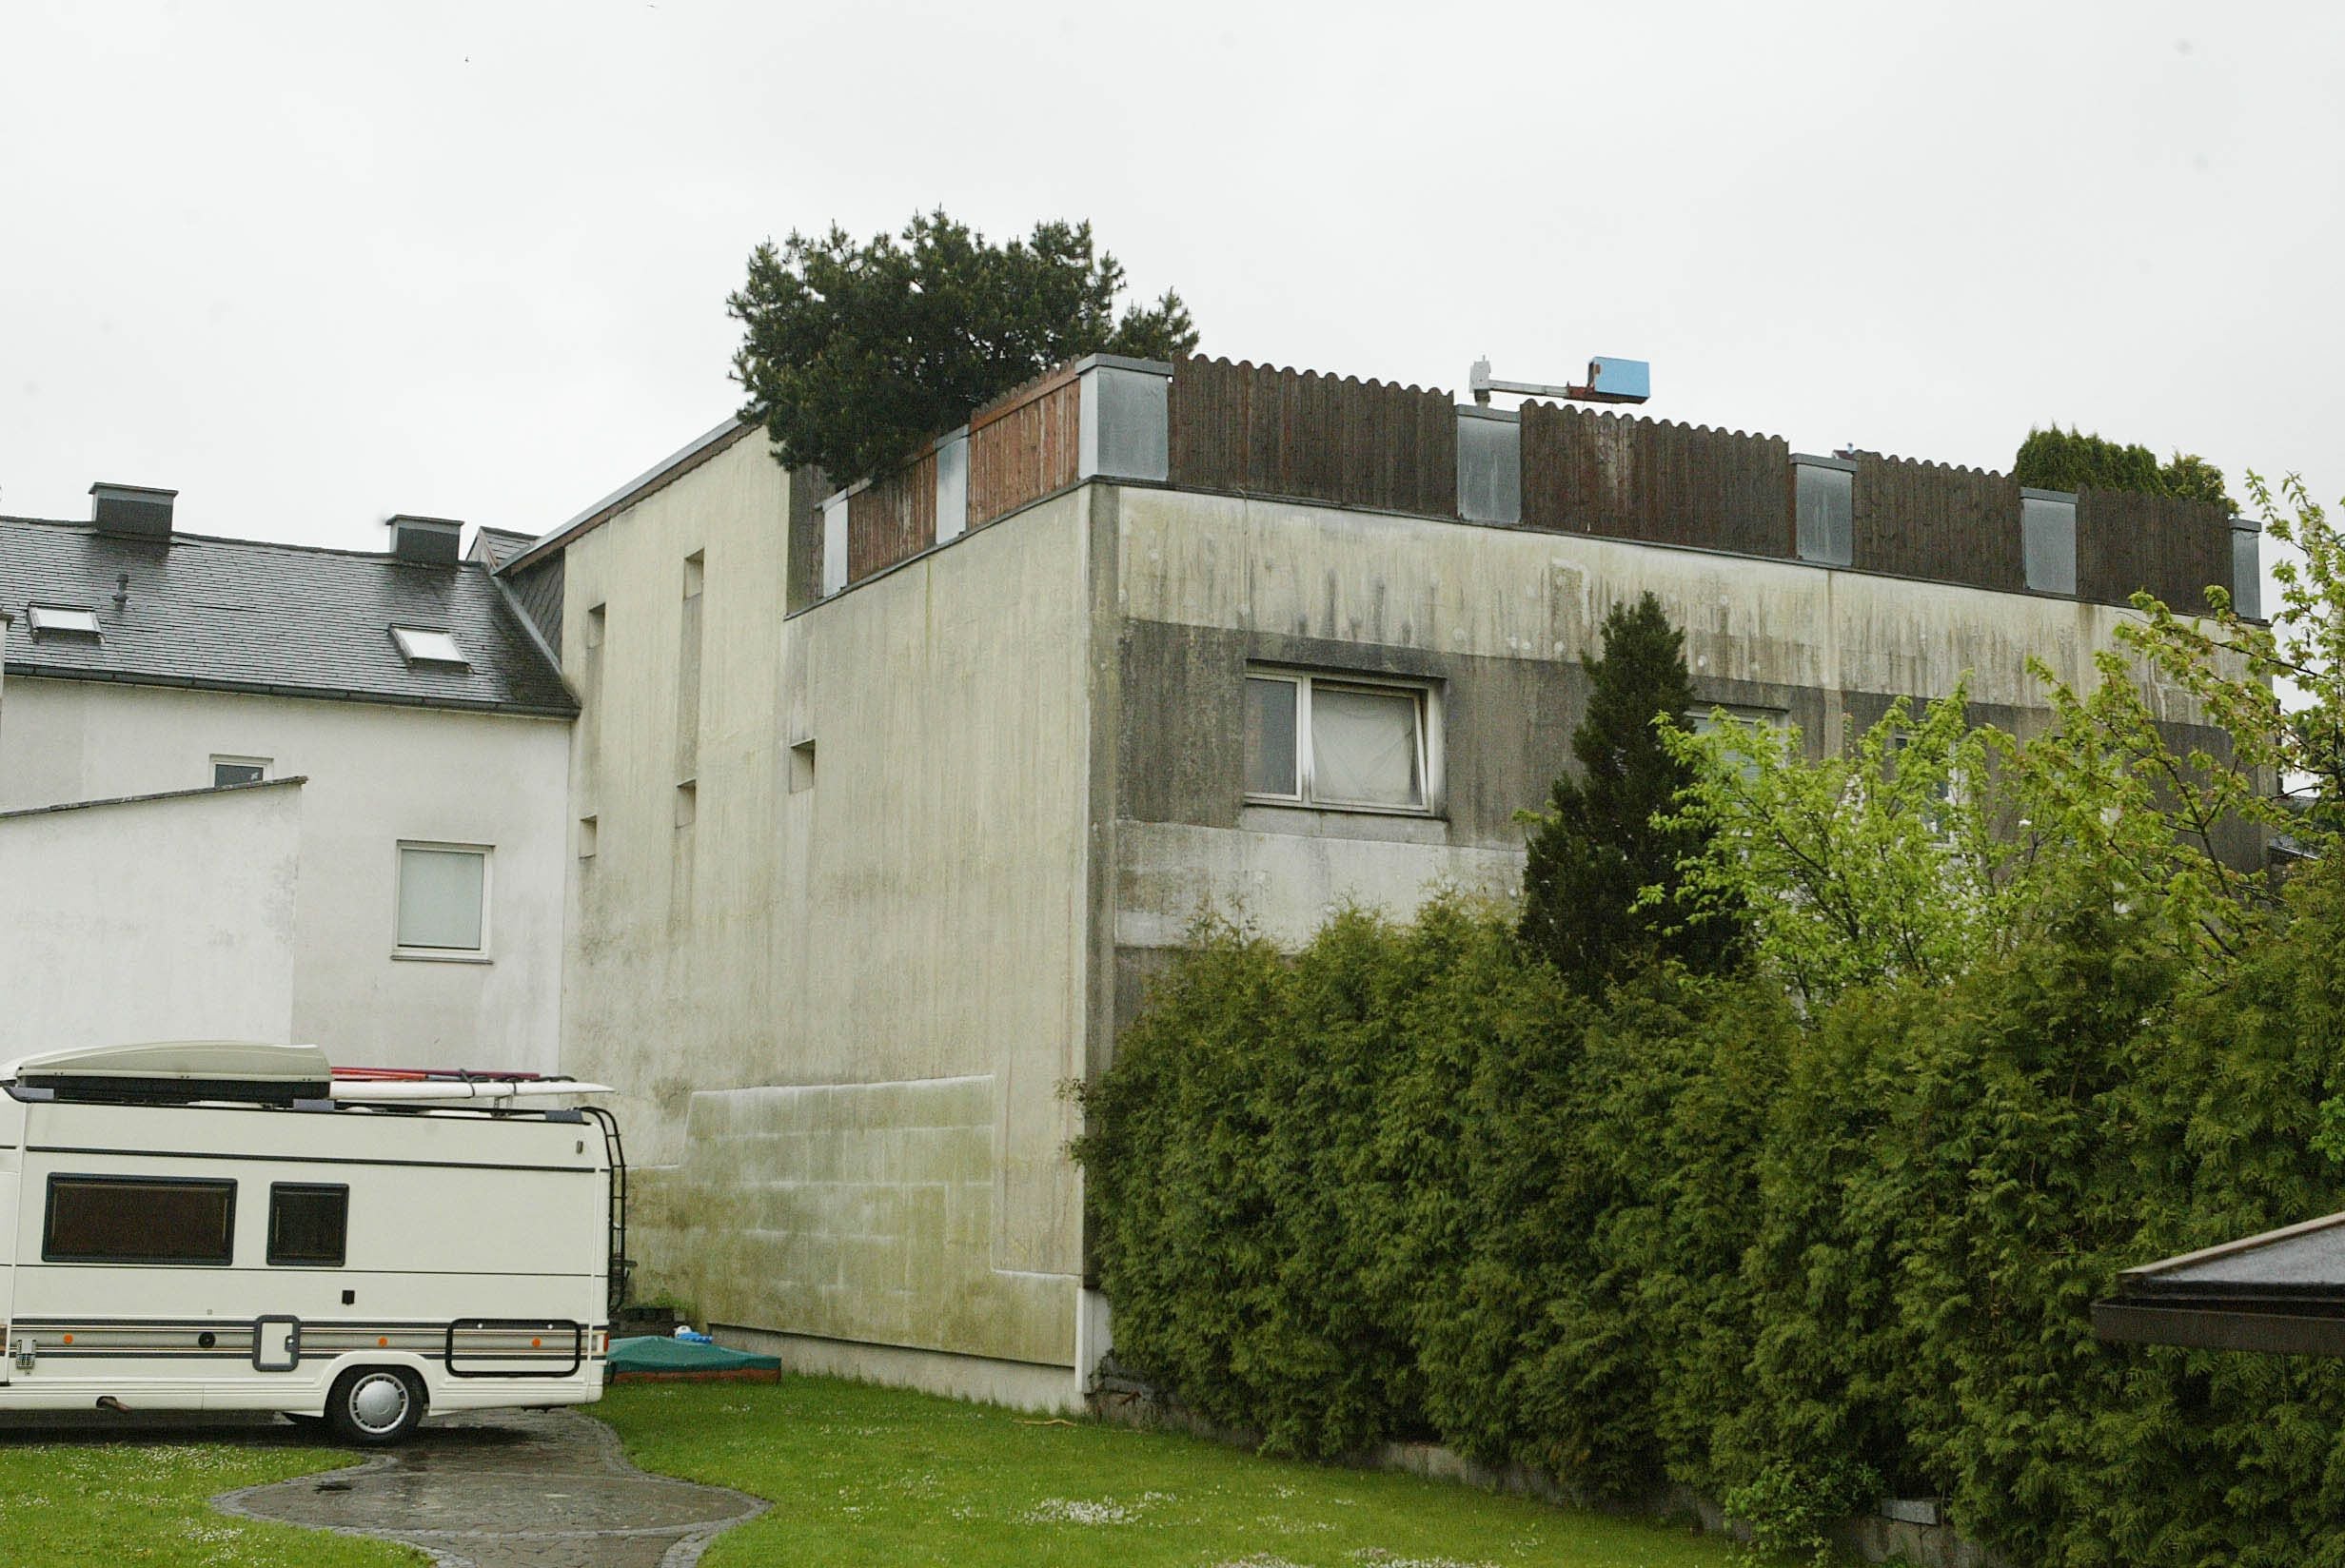 Casa donde Josef Fritzl vivía con su familia.
POLITICA Europa Press/Contacto/p97 